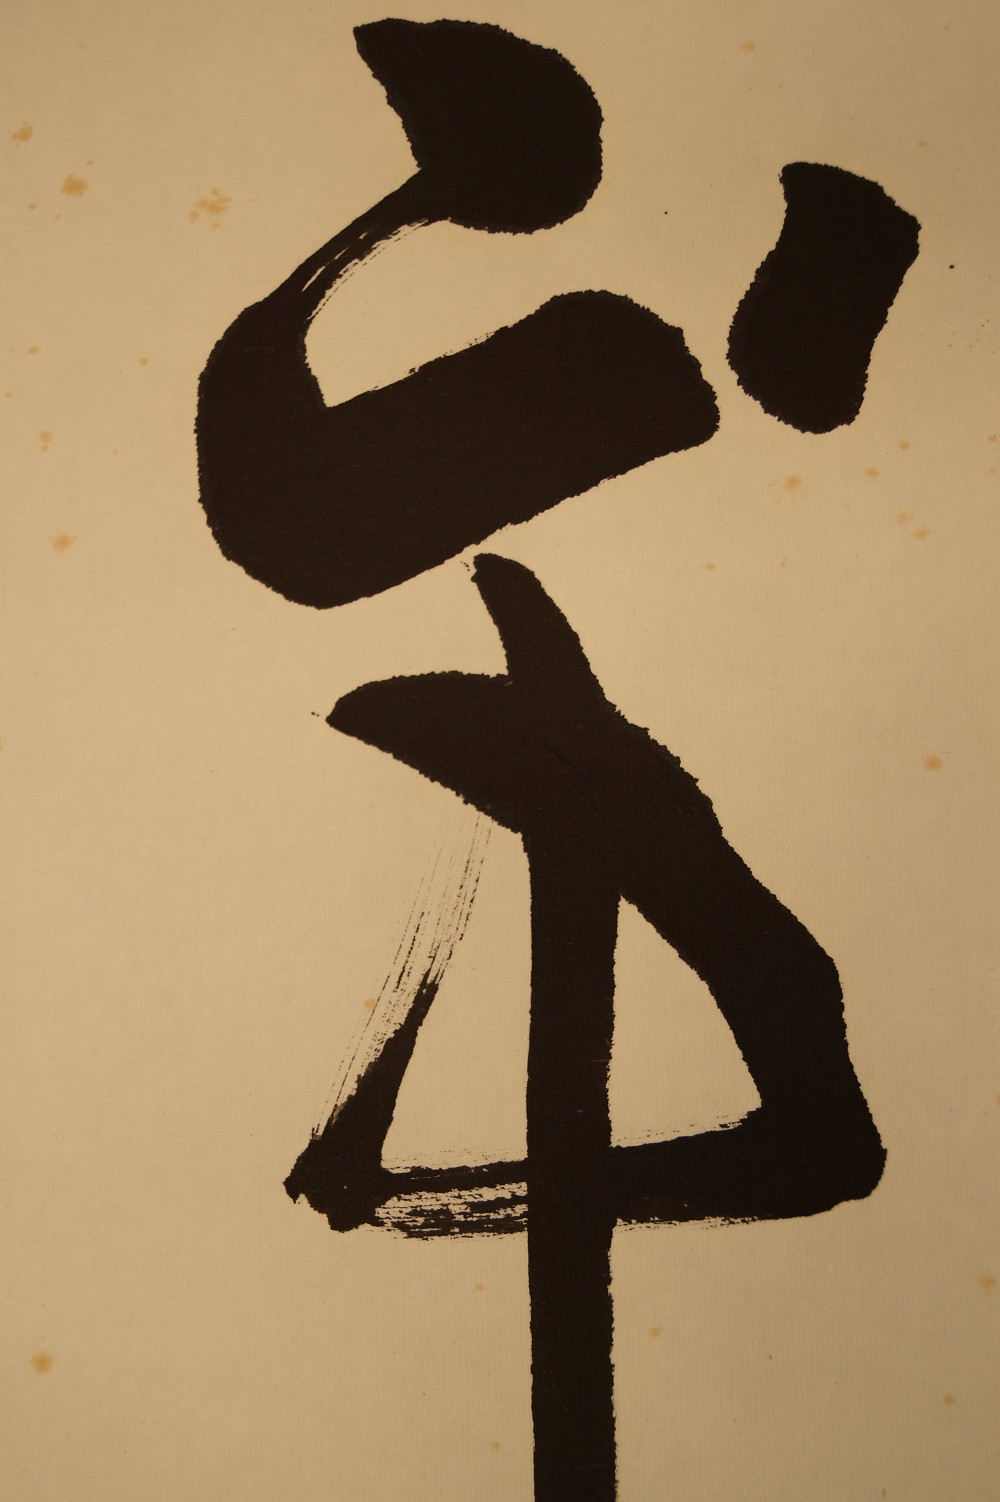 Kalligrafie Gedicht von Ba Li - Japanisches Rollbild (Kakejiku, Kakemono)